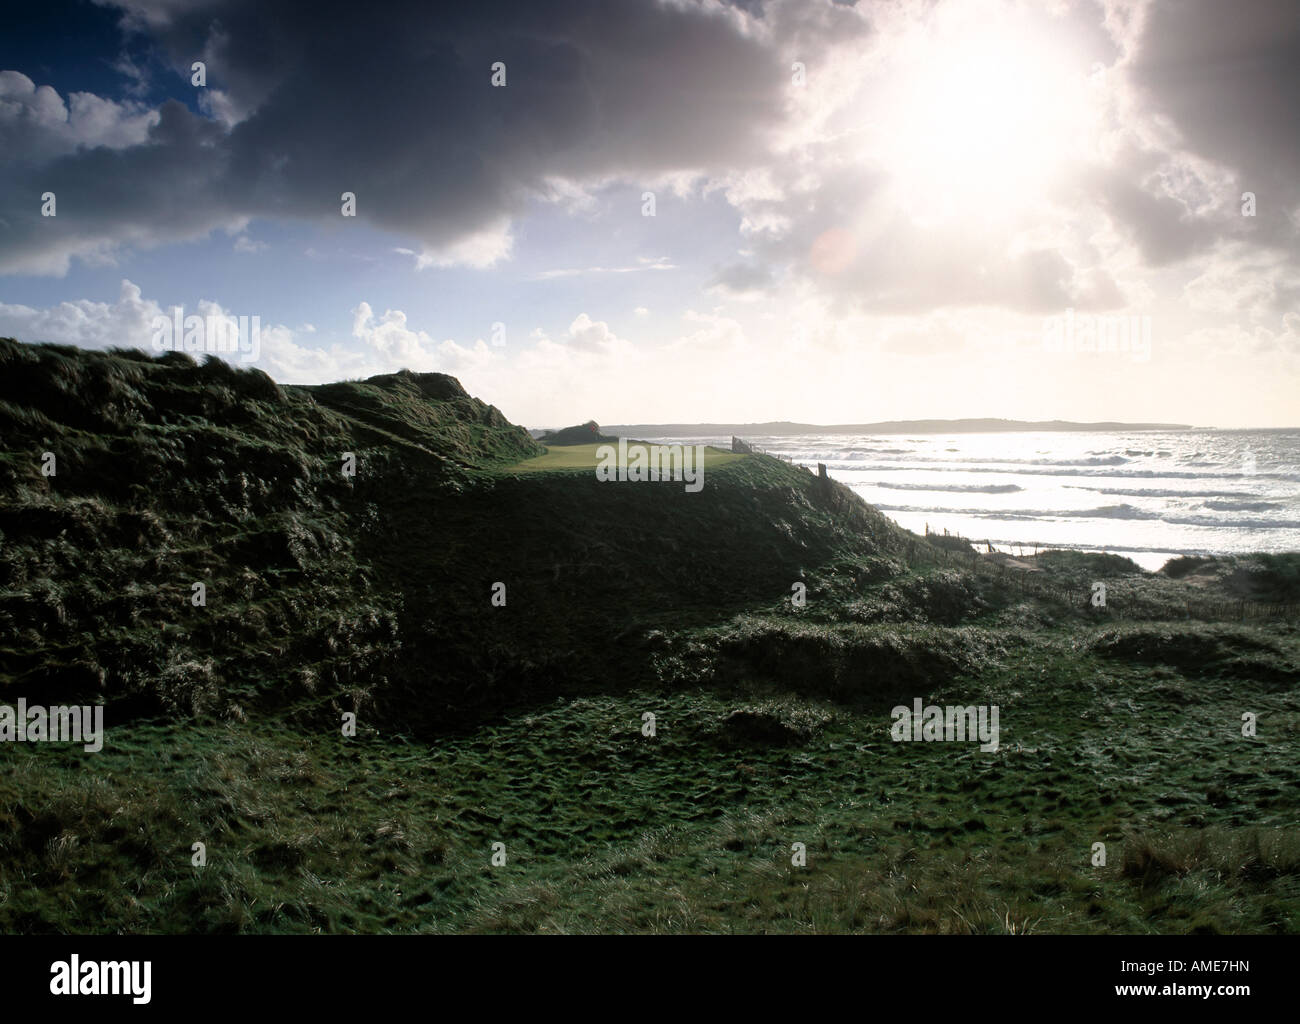 dunbeg, doonbeg golf course, 18 hole links course on atlantic coast, Stock Photo